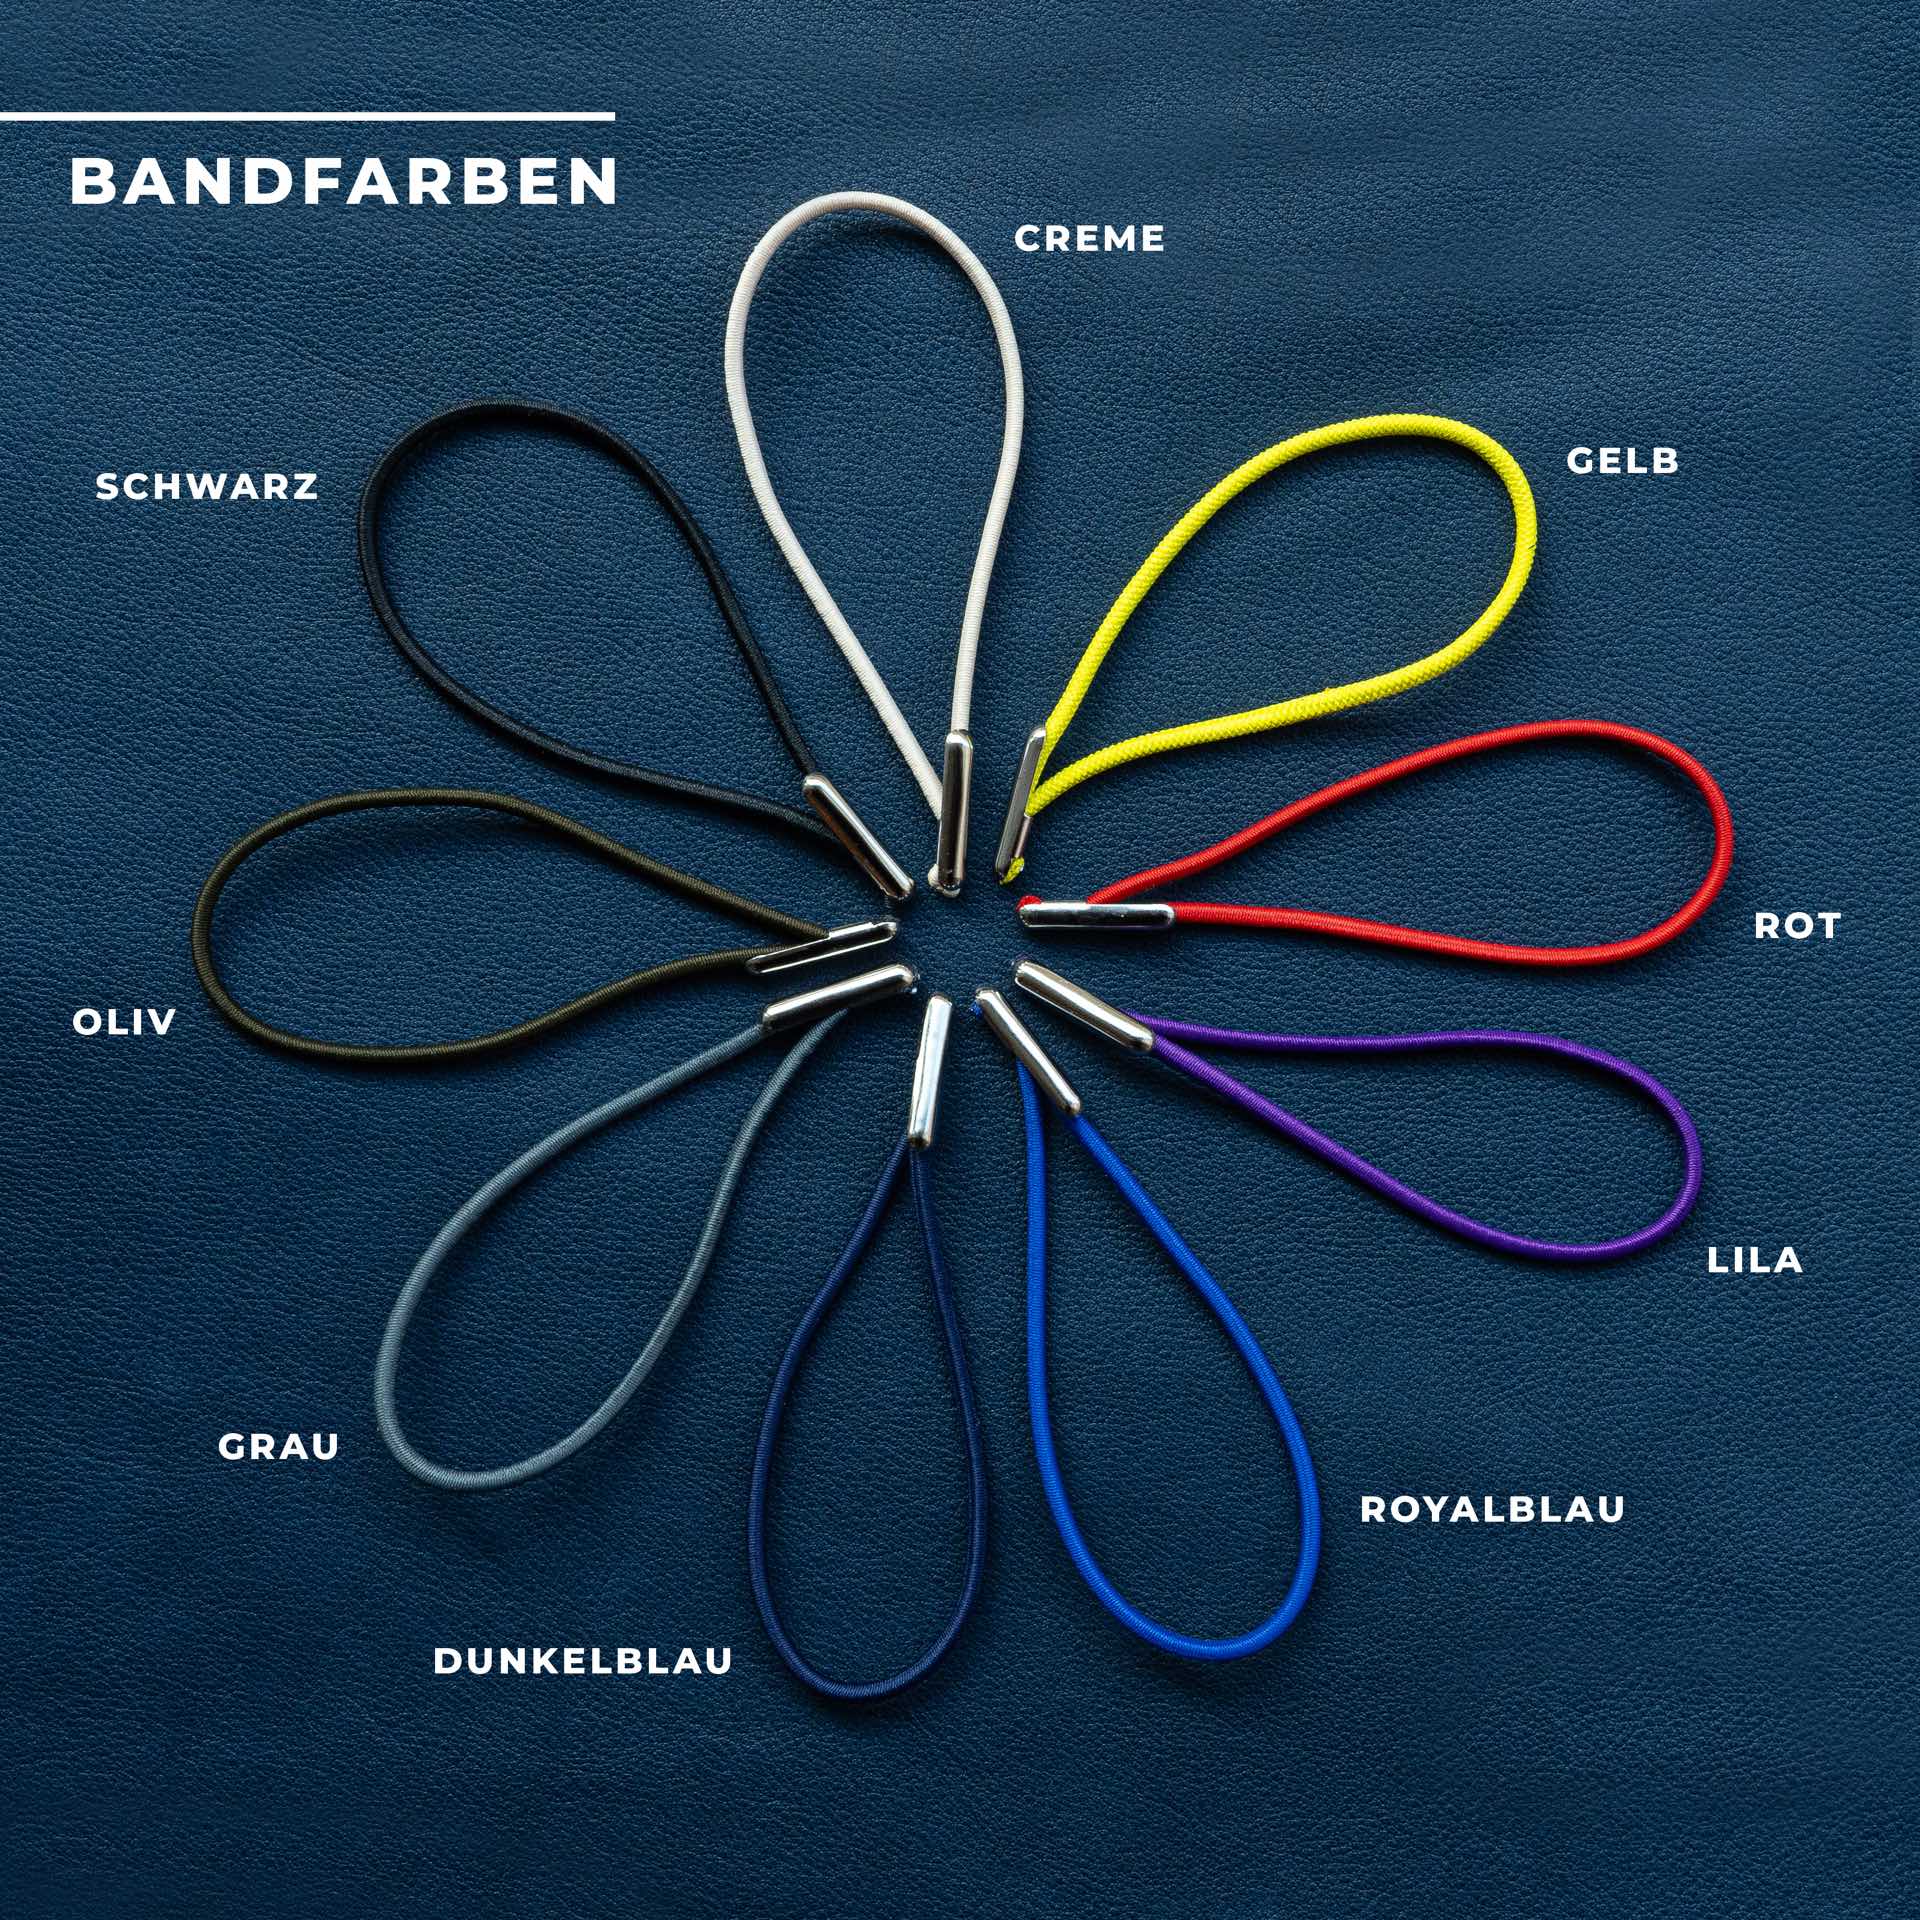 Bandfarben-Franziska-Klee-dunkelblau-bandfarben